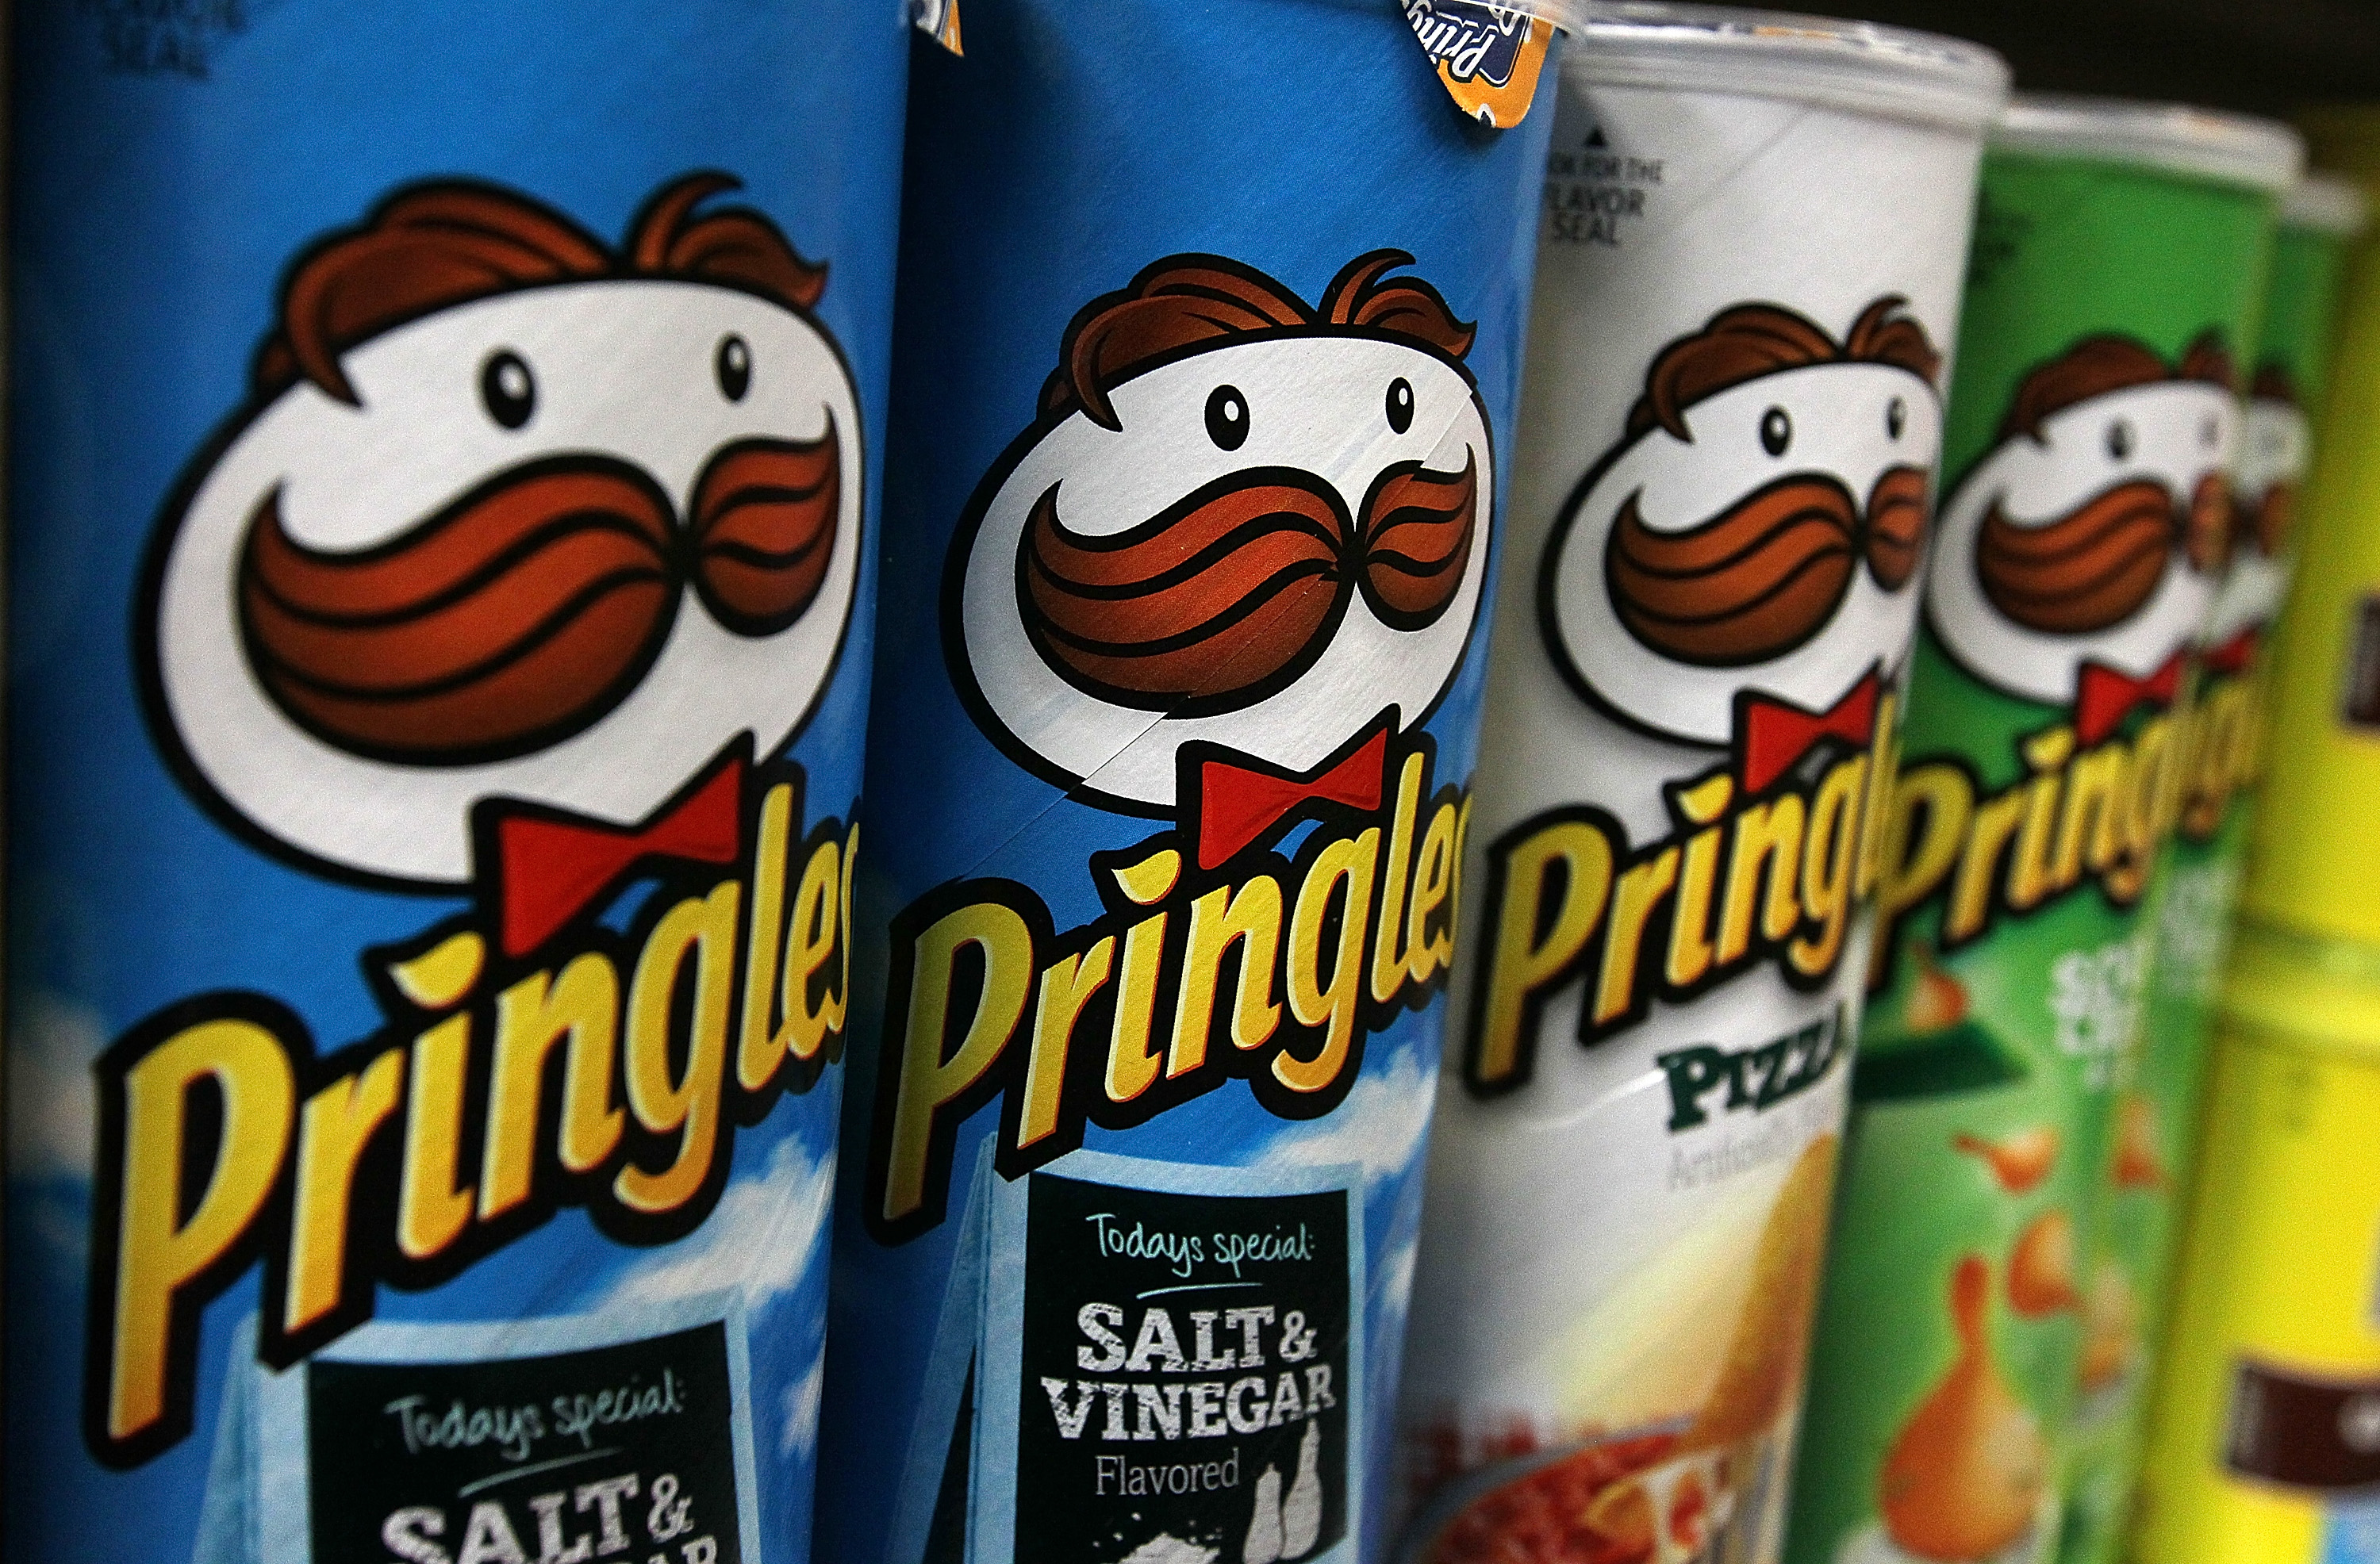 Proctor & Gamble Sells Pringles Brand To Diamond Foods For $1.5 Billion